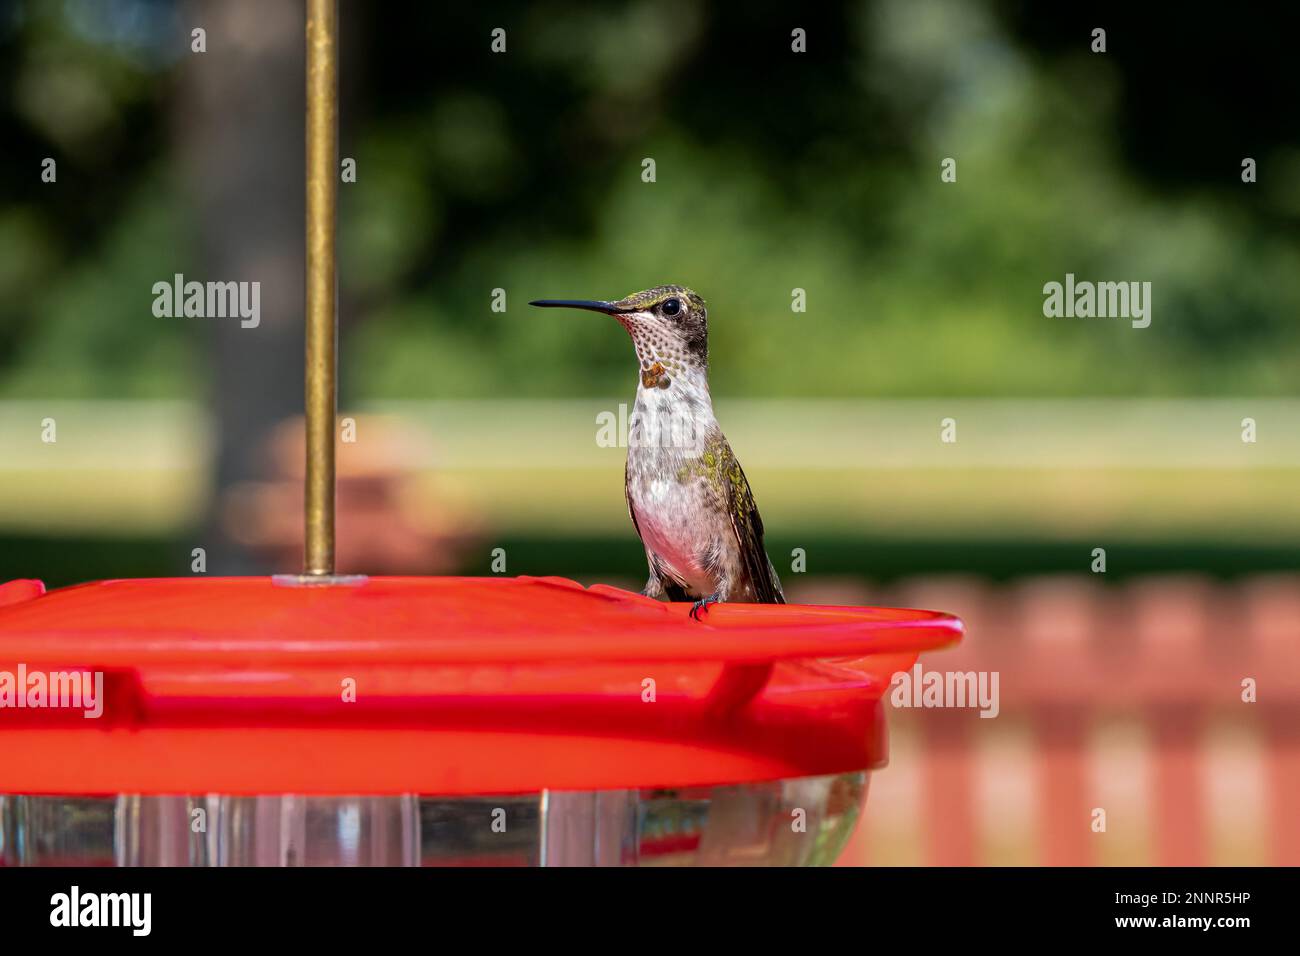 Ruby-throated hummingbird drinking from hummingbird feeder. Backyard birding, birdwatching and wildlife habitat preservation concept. Stock Photo